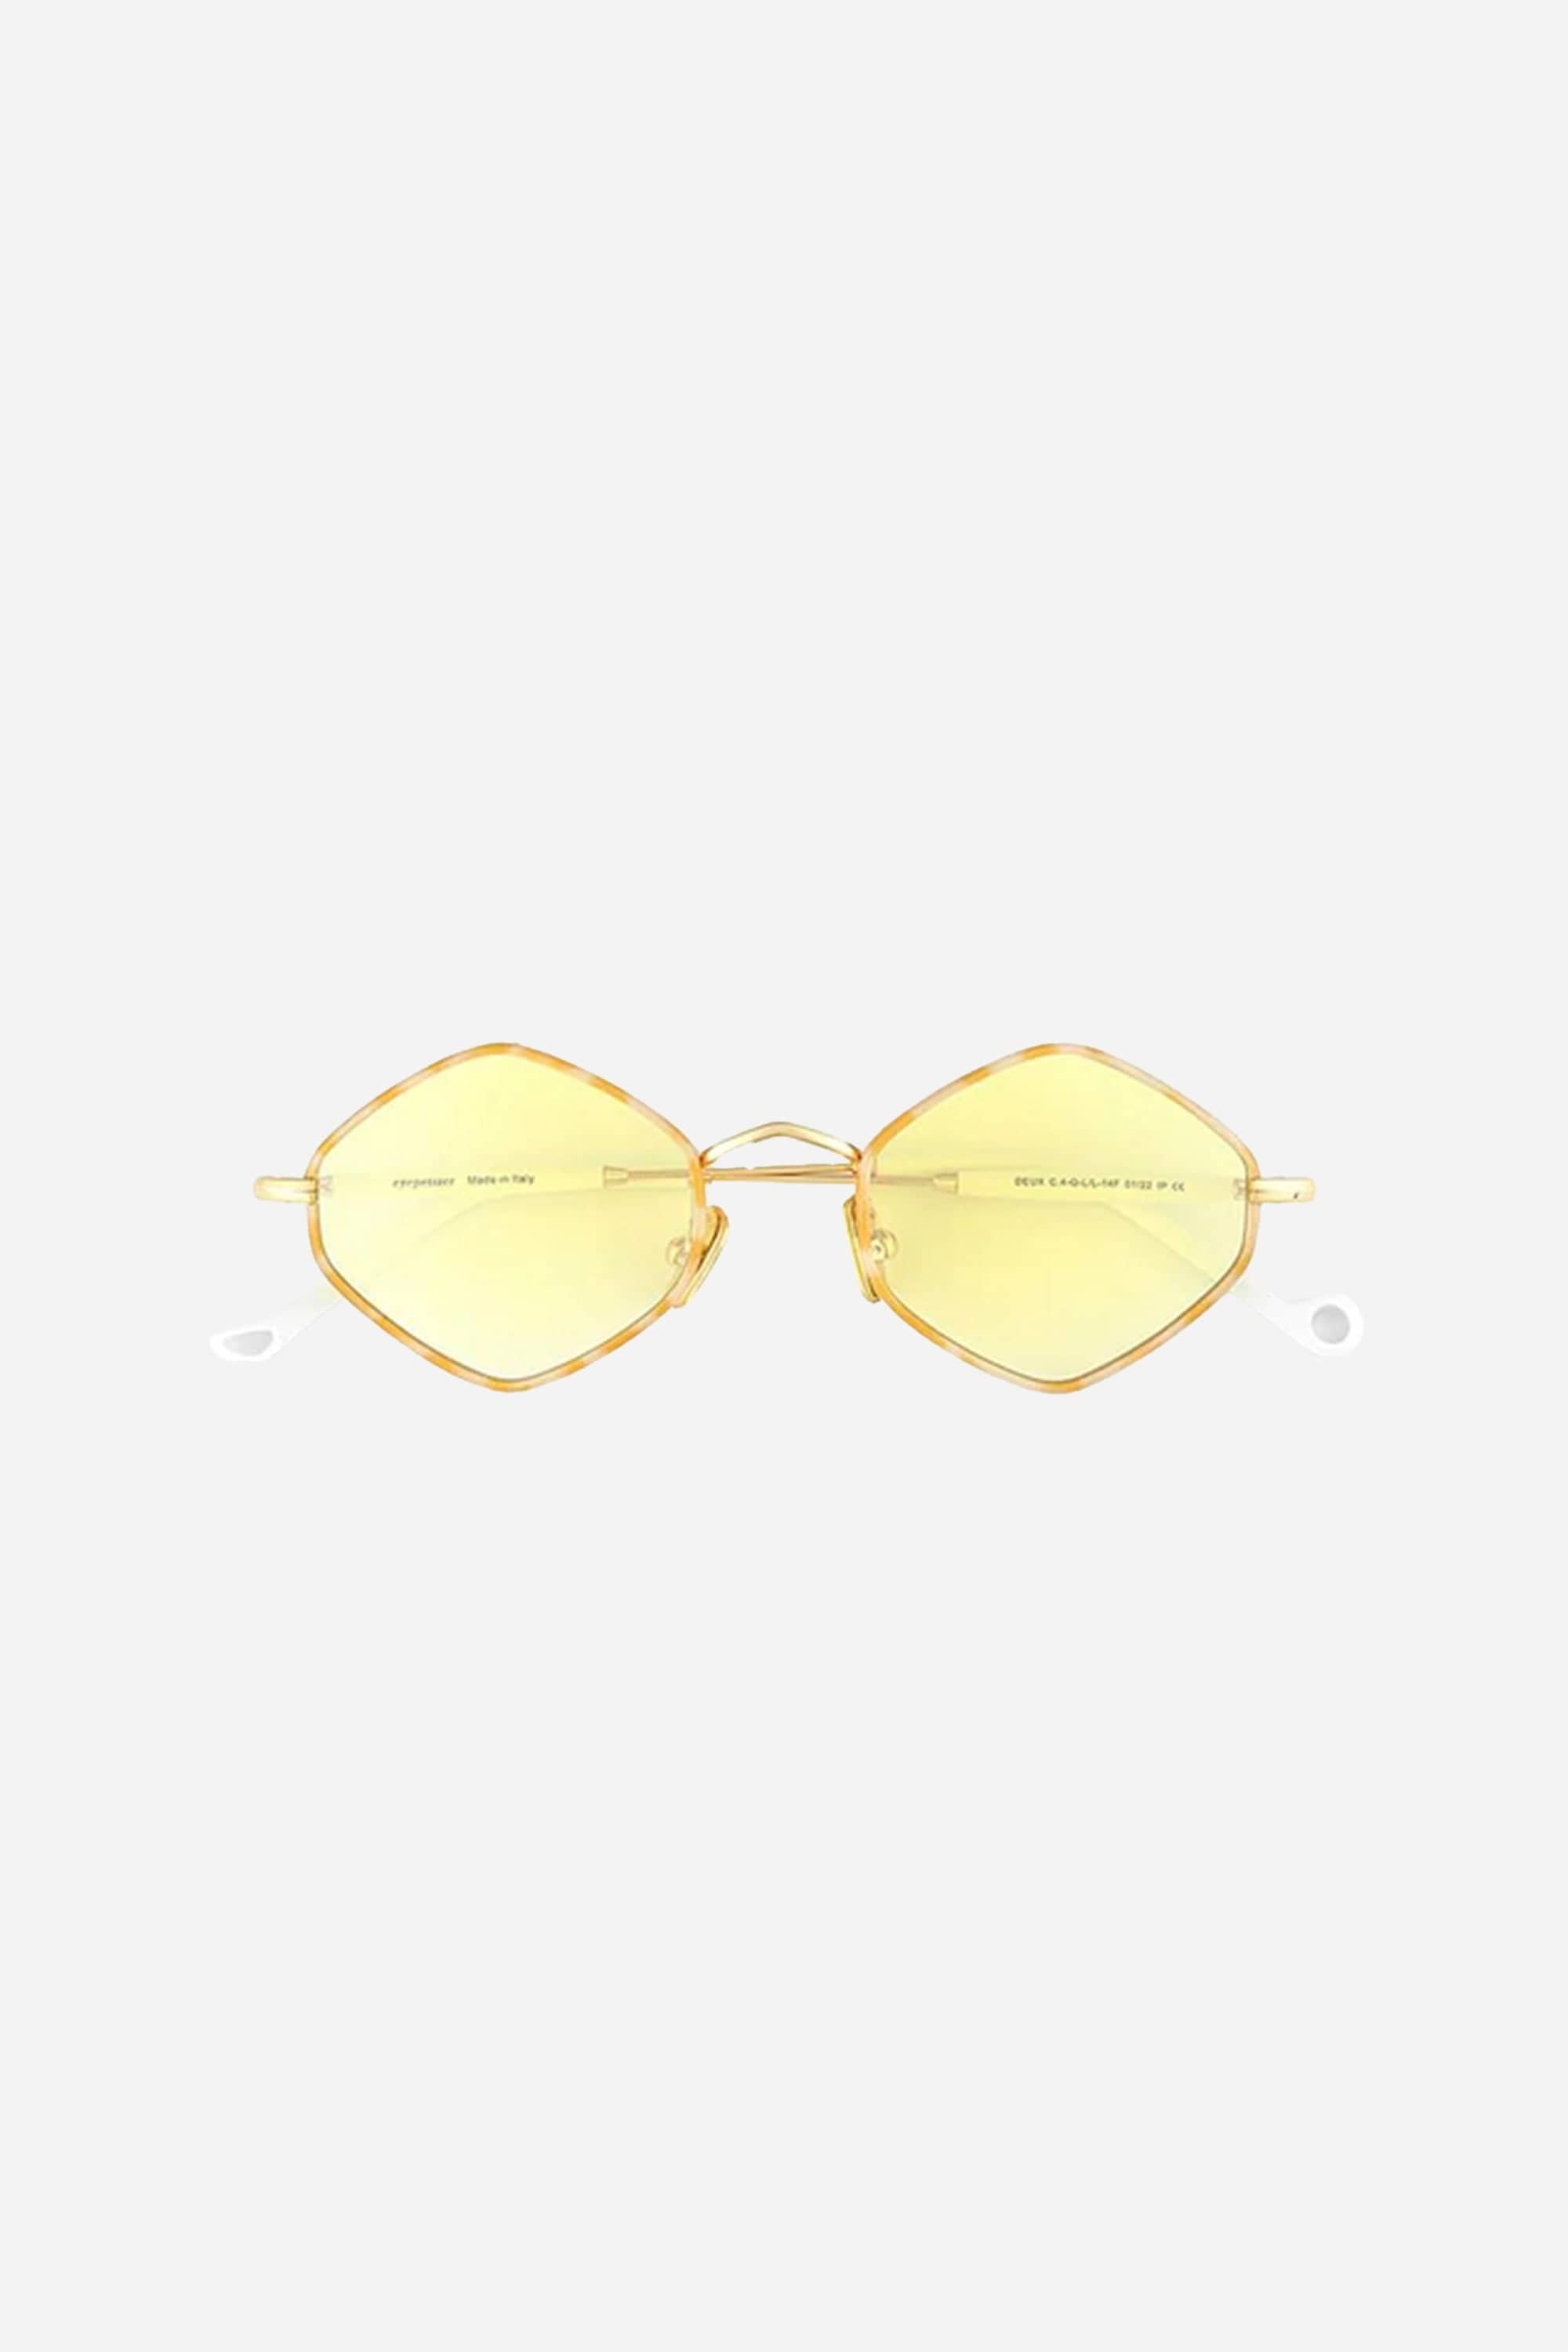 Eyepetizer metal rombo yellow sunglasses - Eyewear Club